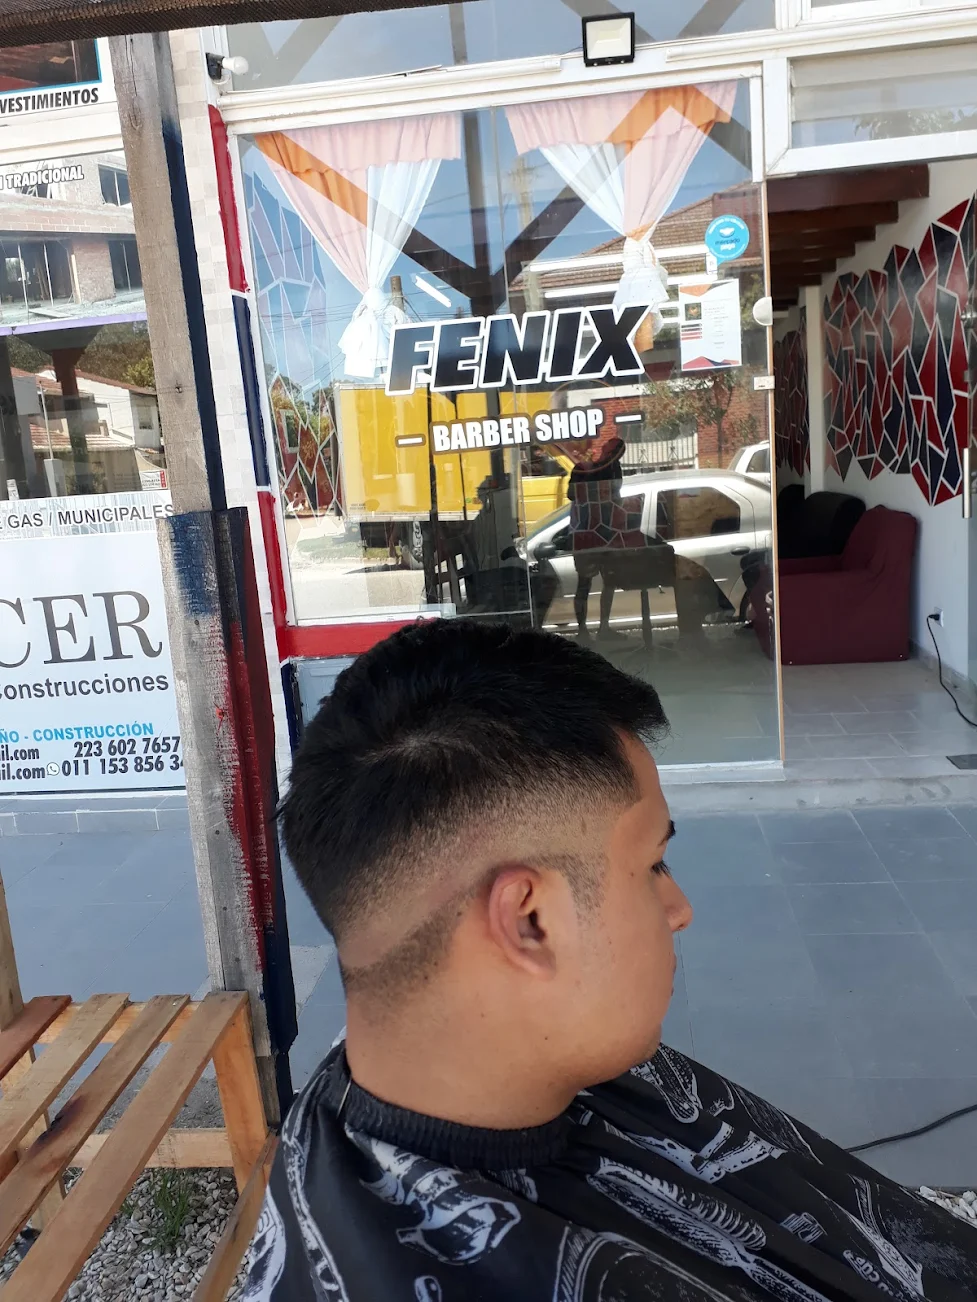 Barber Shop Fénix